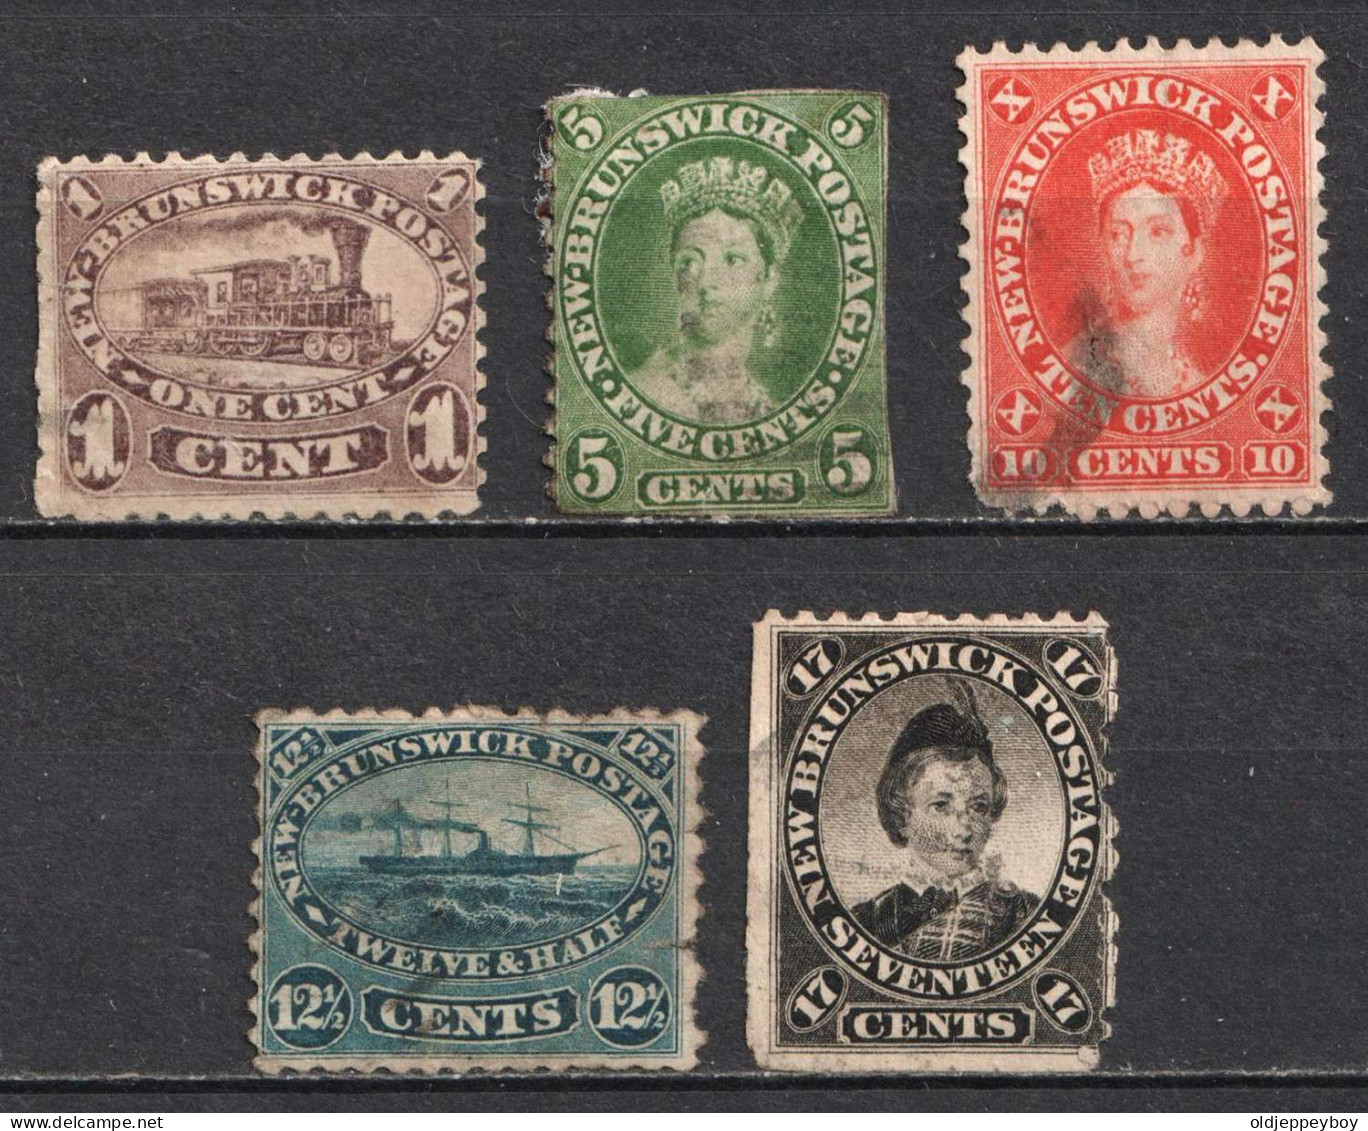 1860-63 New Brunswick, Canada, British Colonies (Mi. 4, 6 - 9, Canceled, CV $290) - Unused Stamps